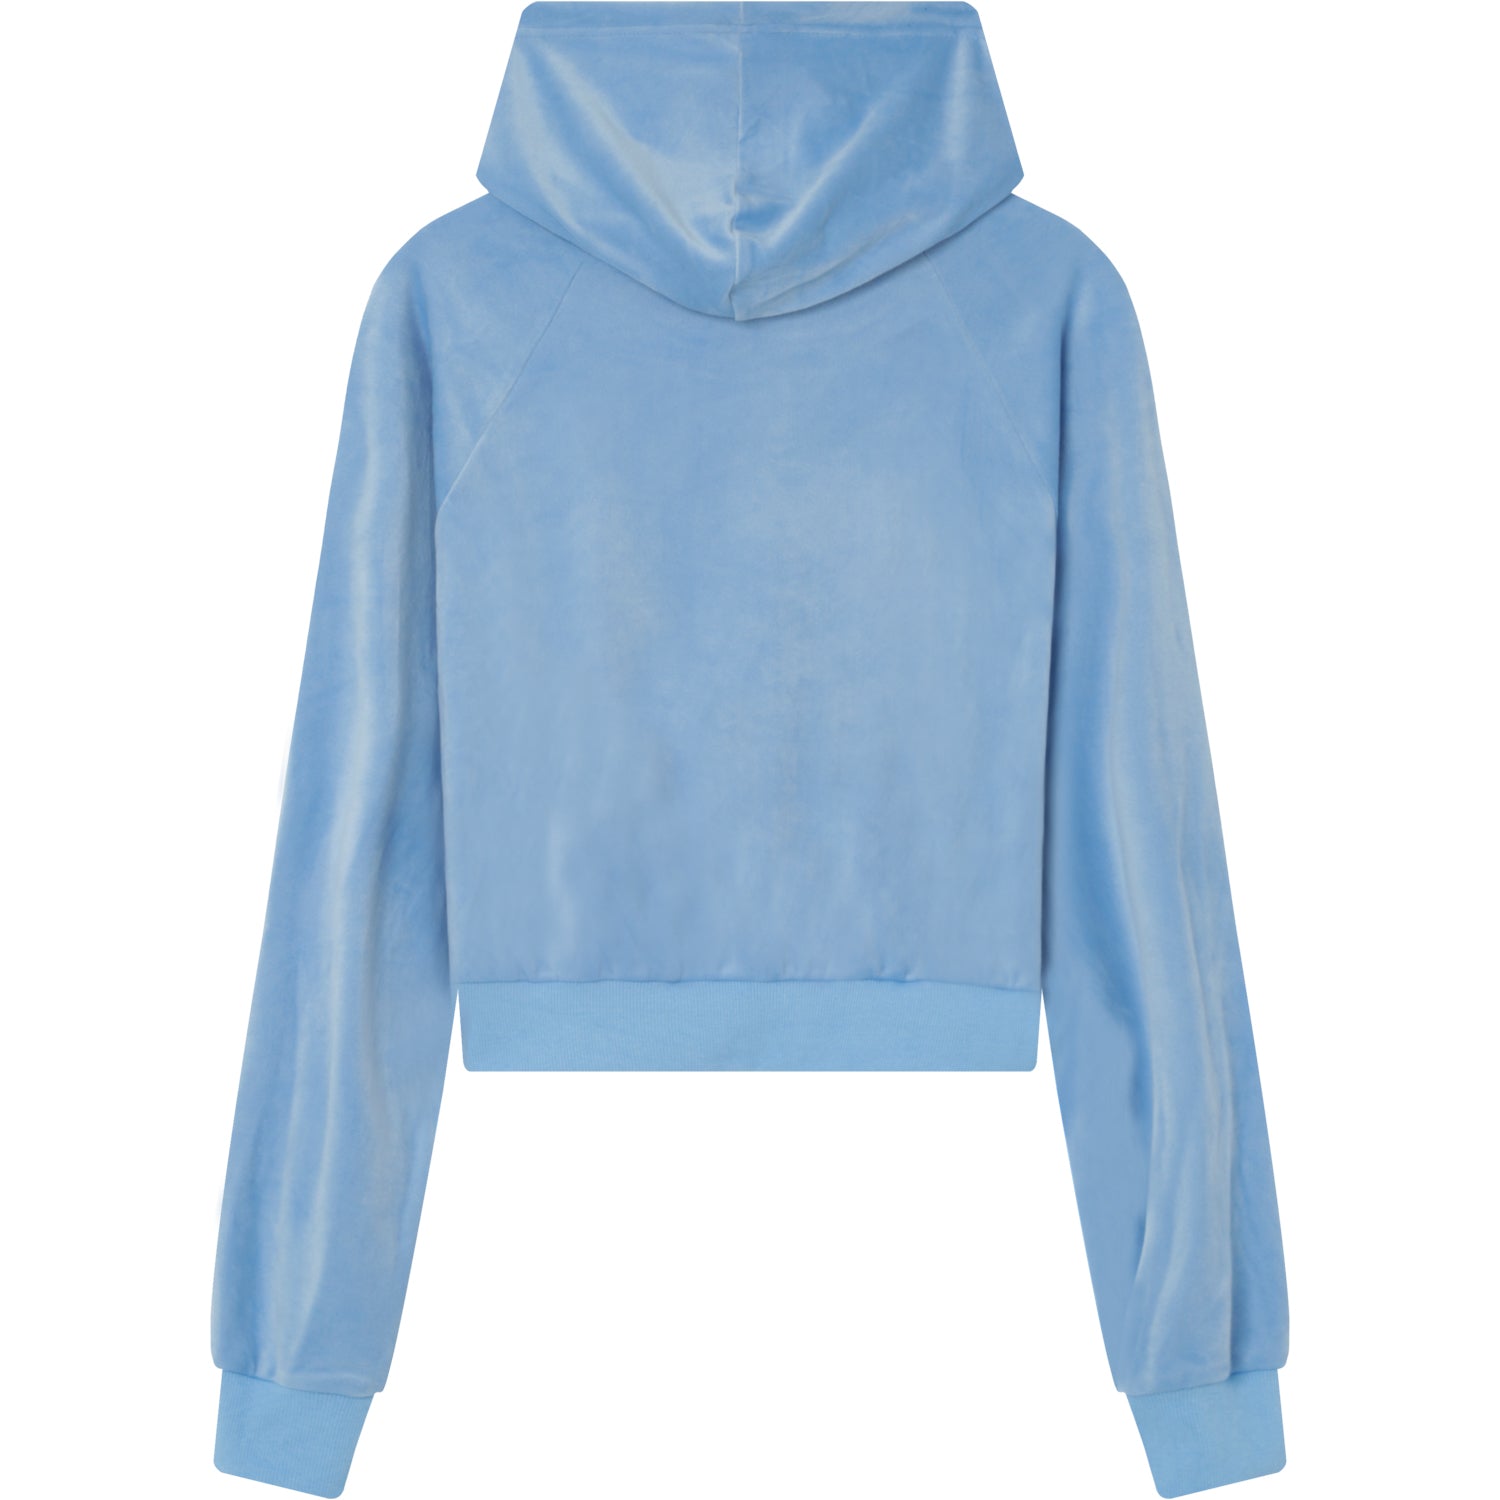 Sweatshirt capuche velours strass Bleu